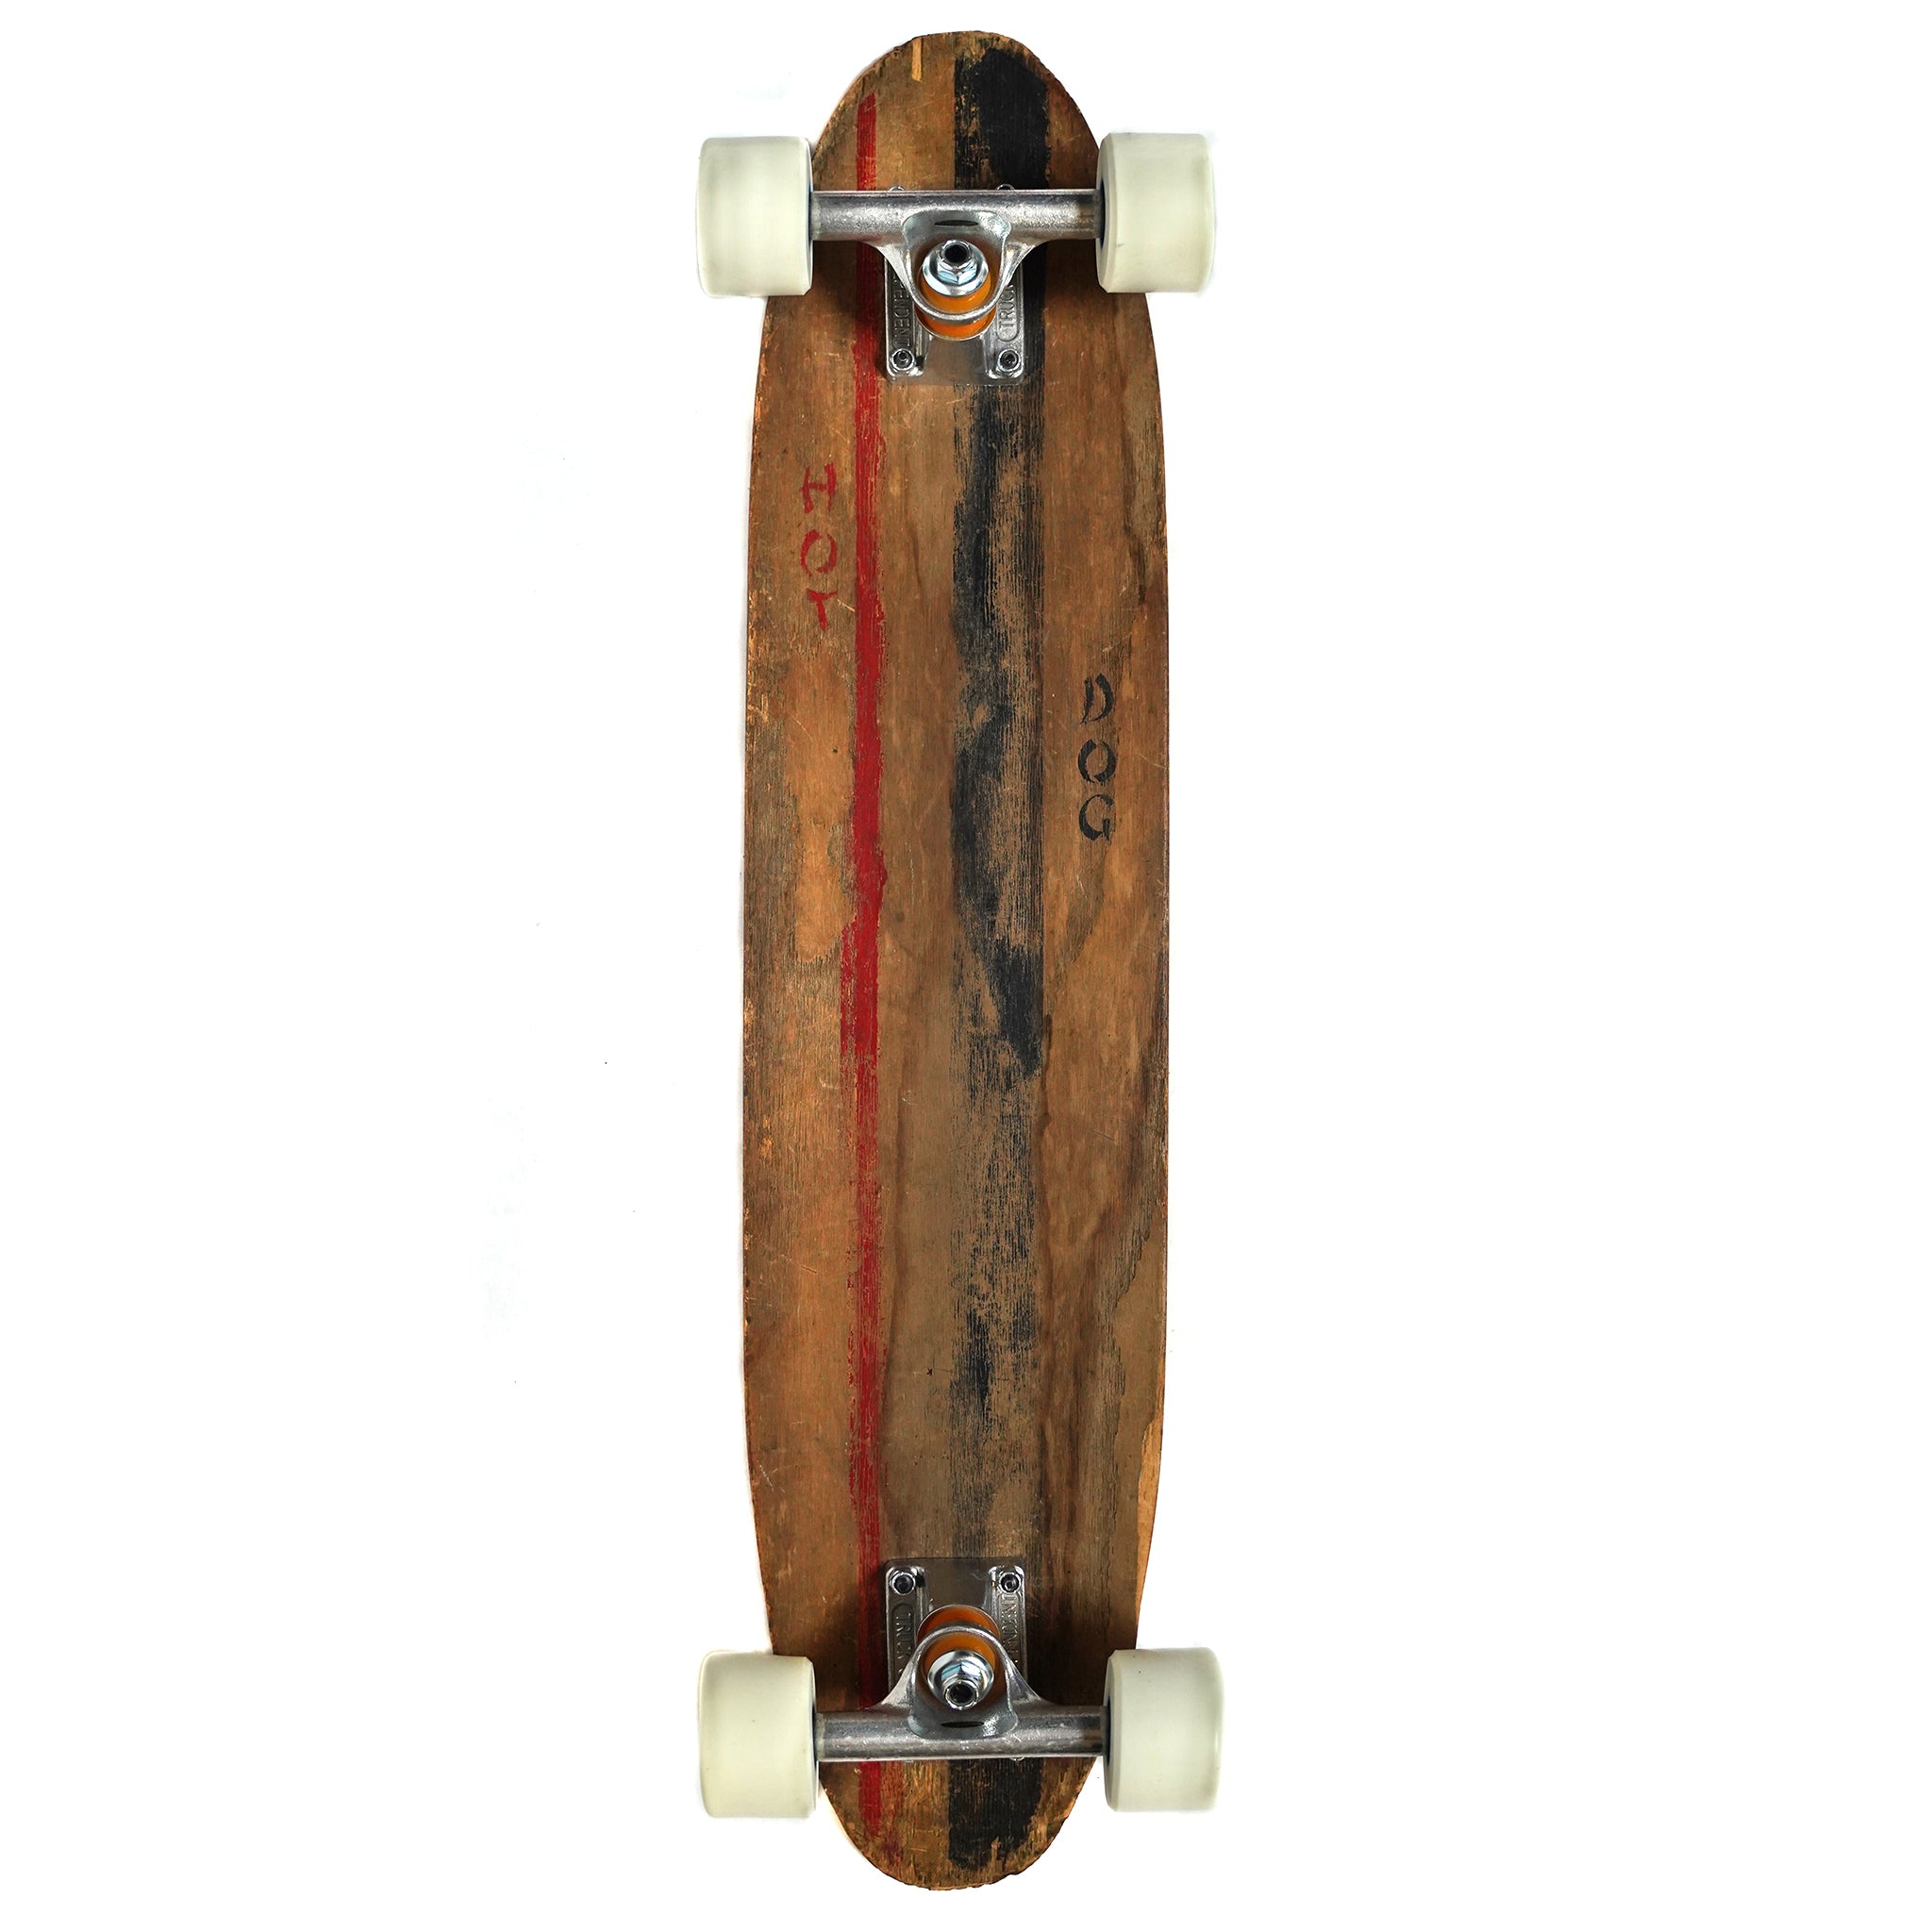 Drippy Black Skateboard